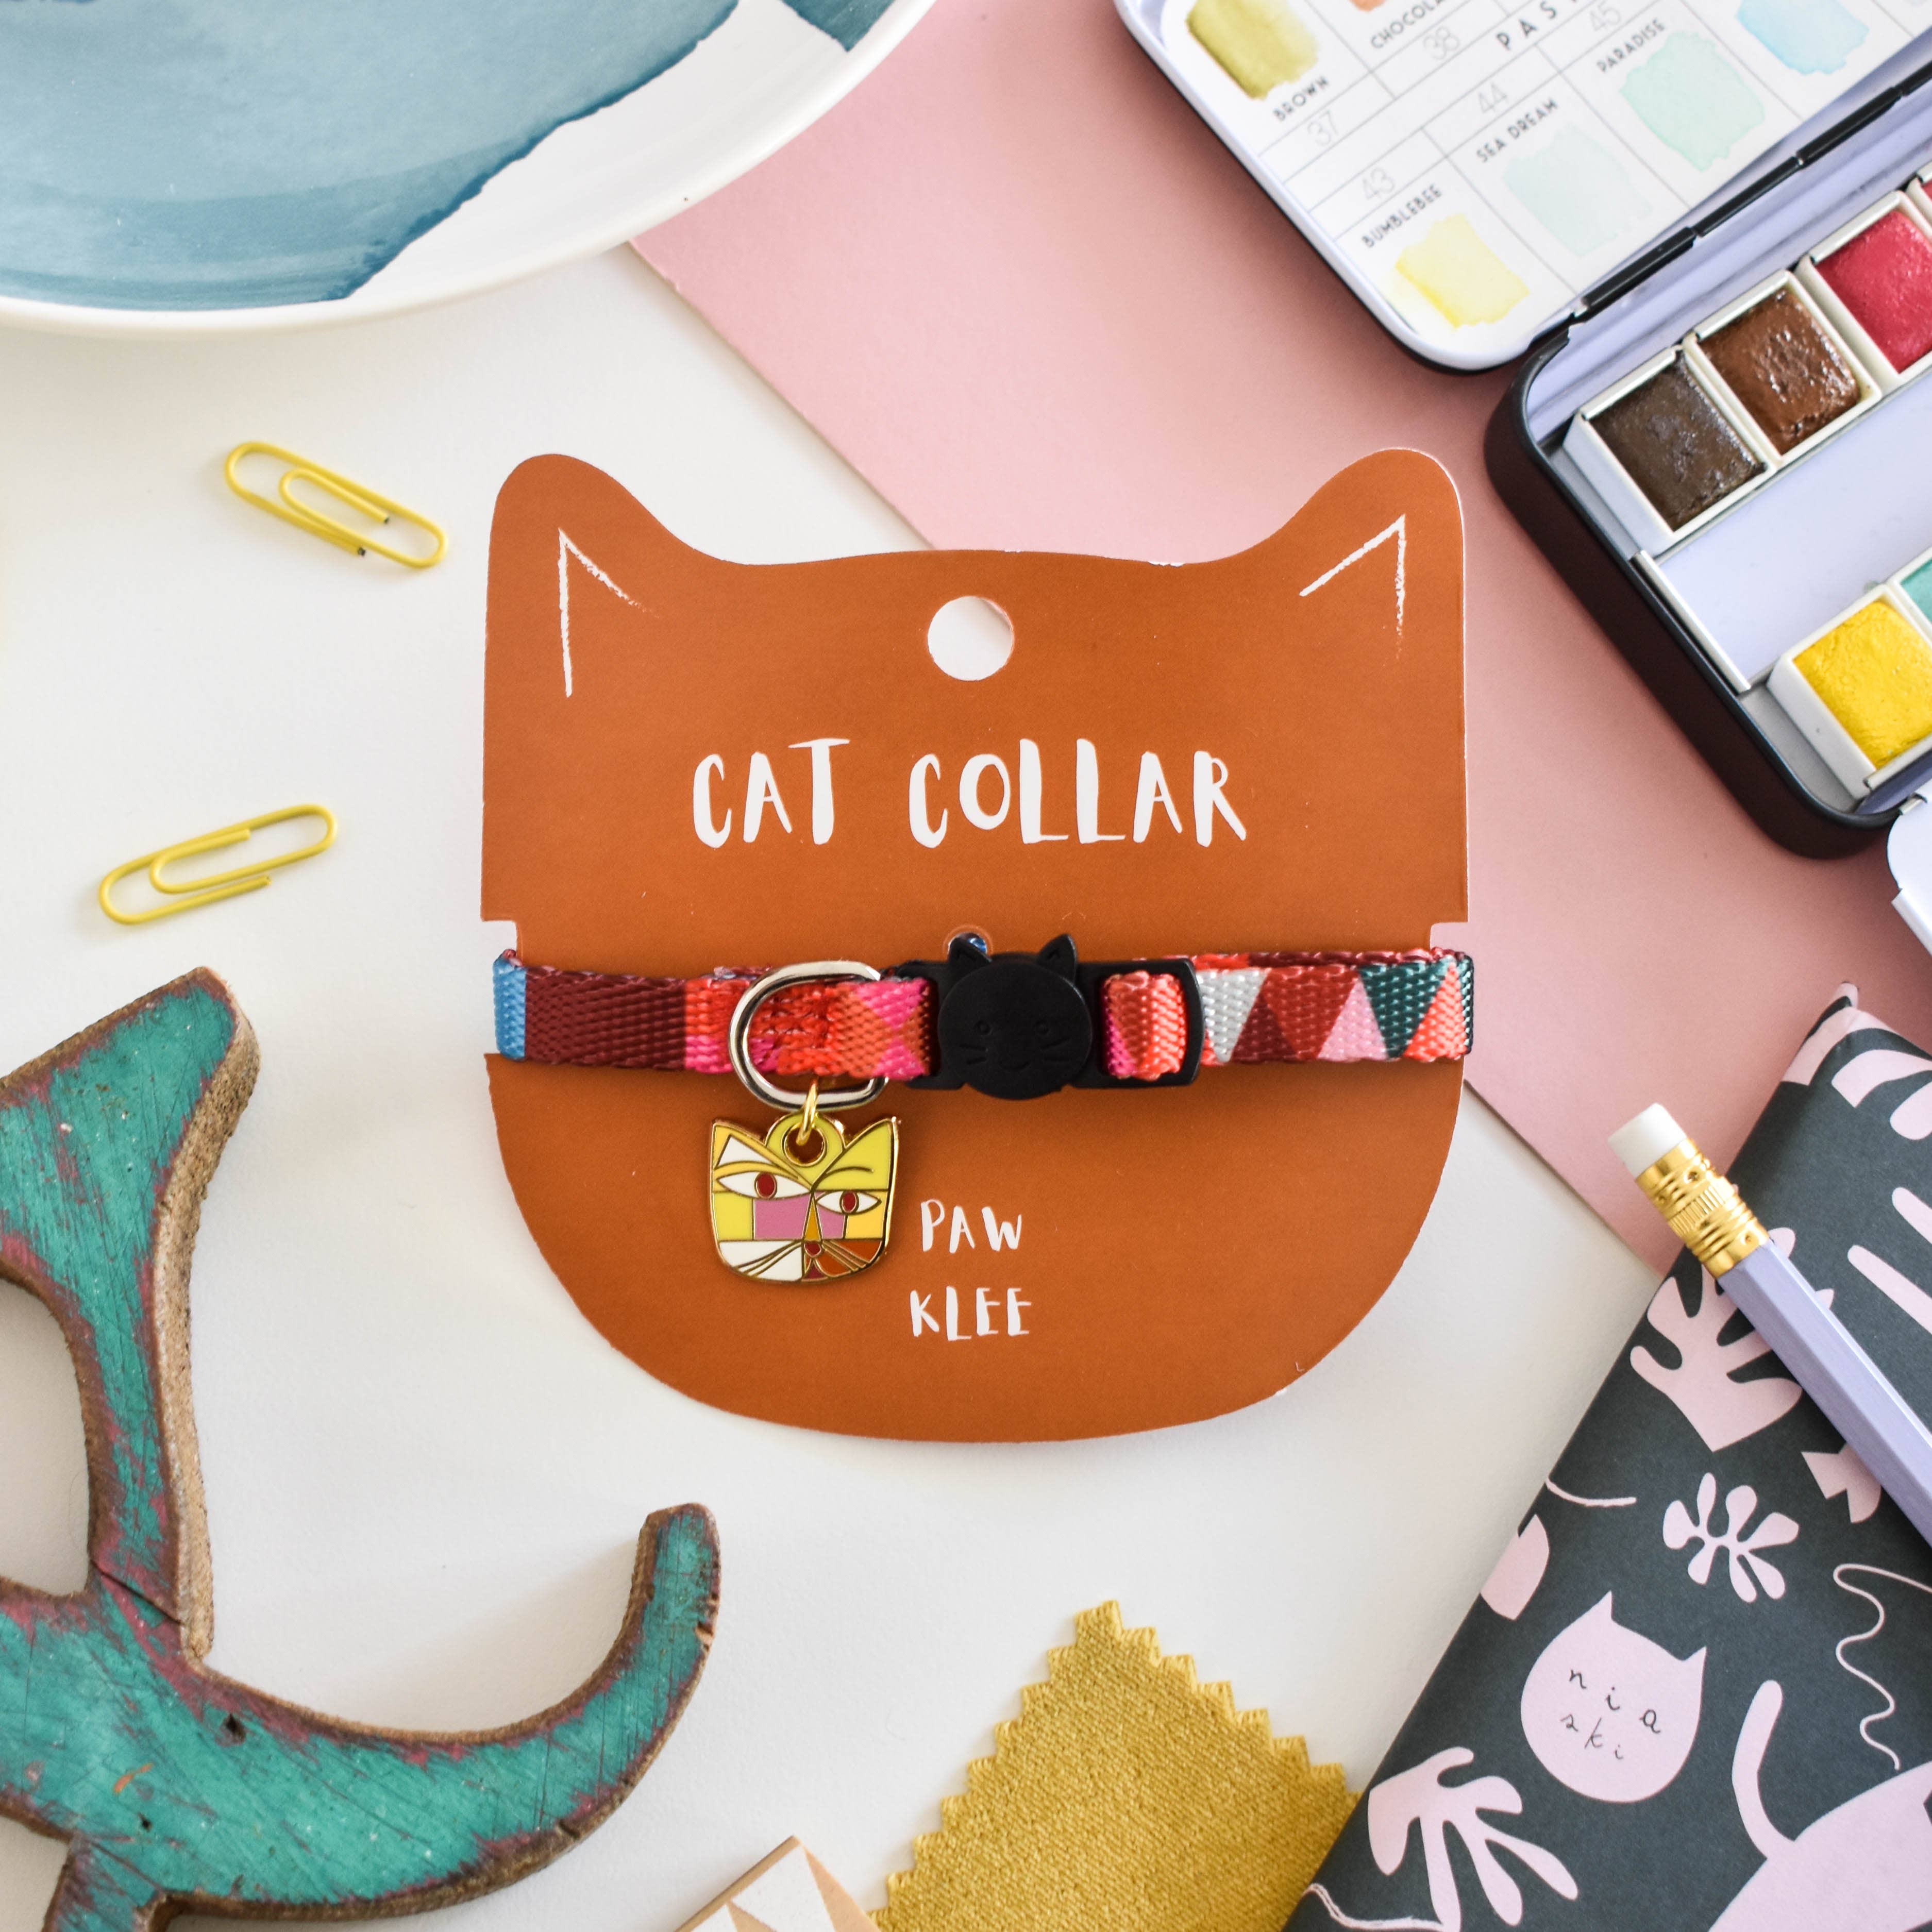 Paw Klee Artist Cat Collar by Niaski